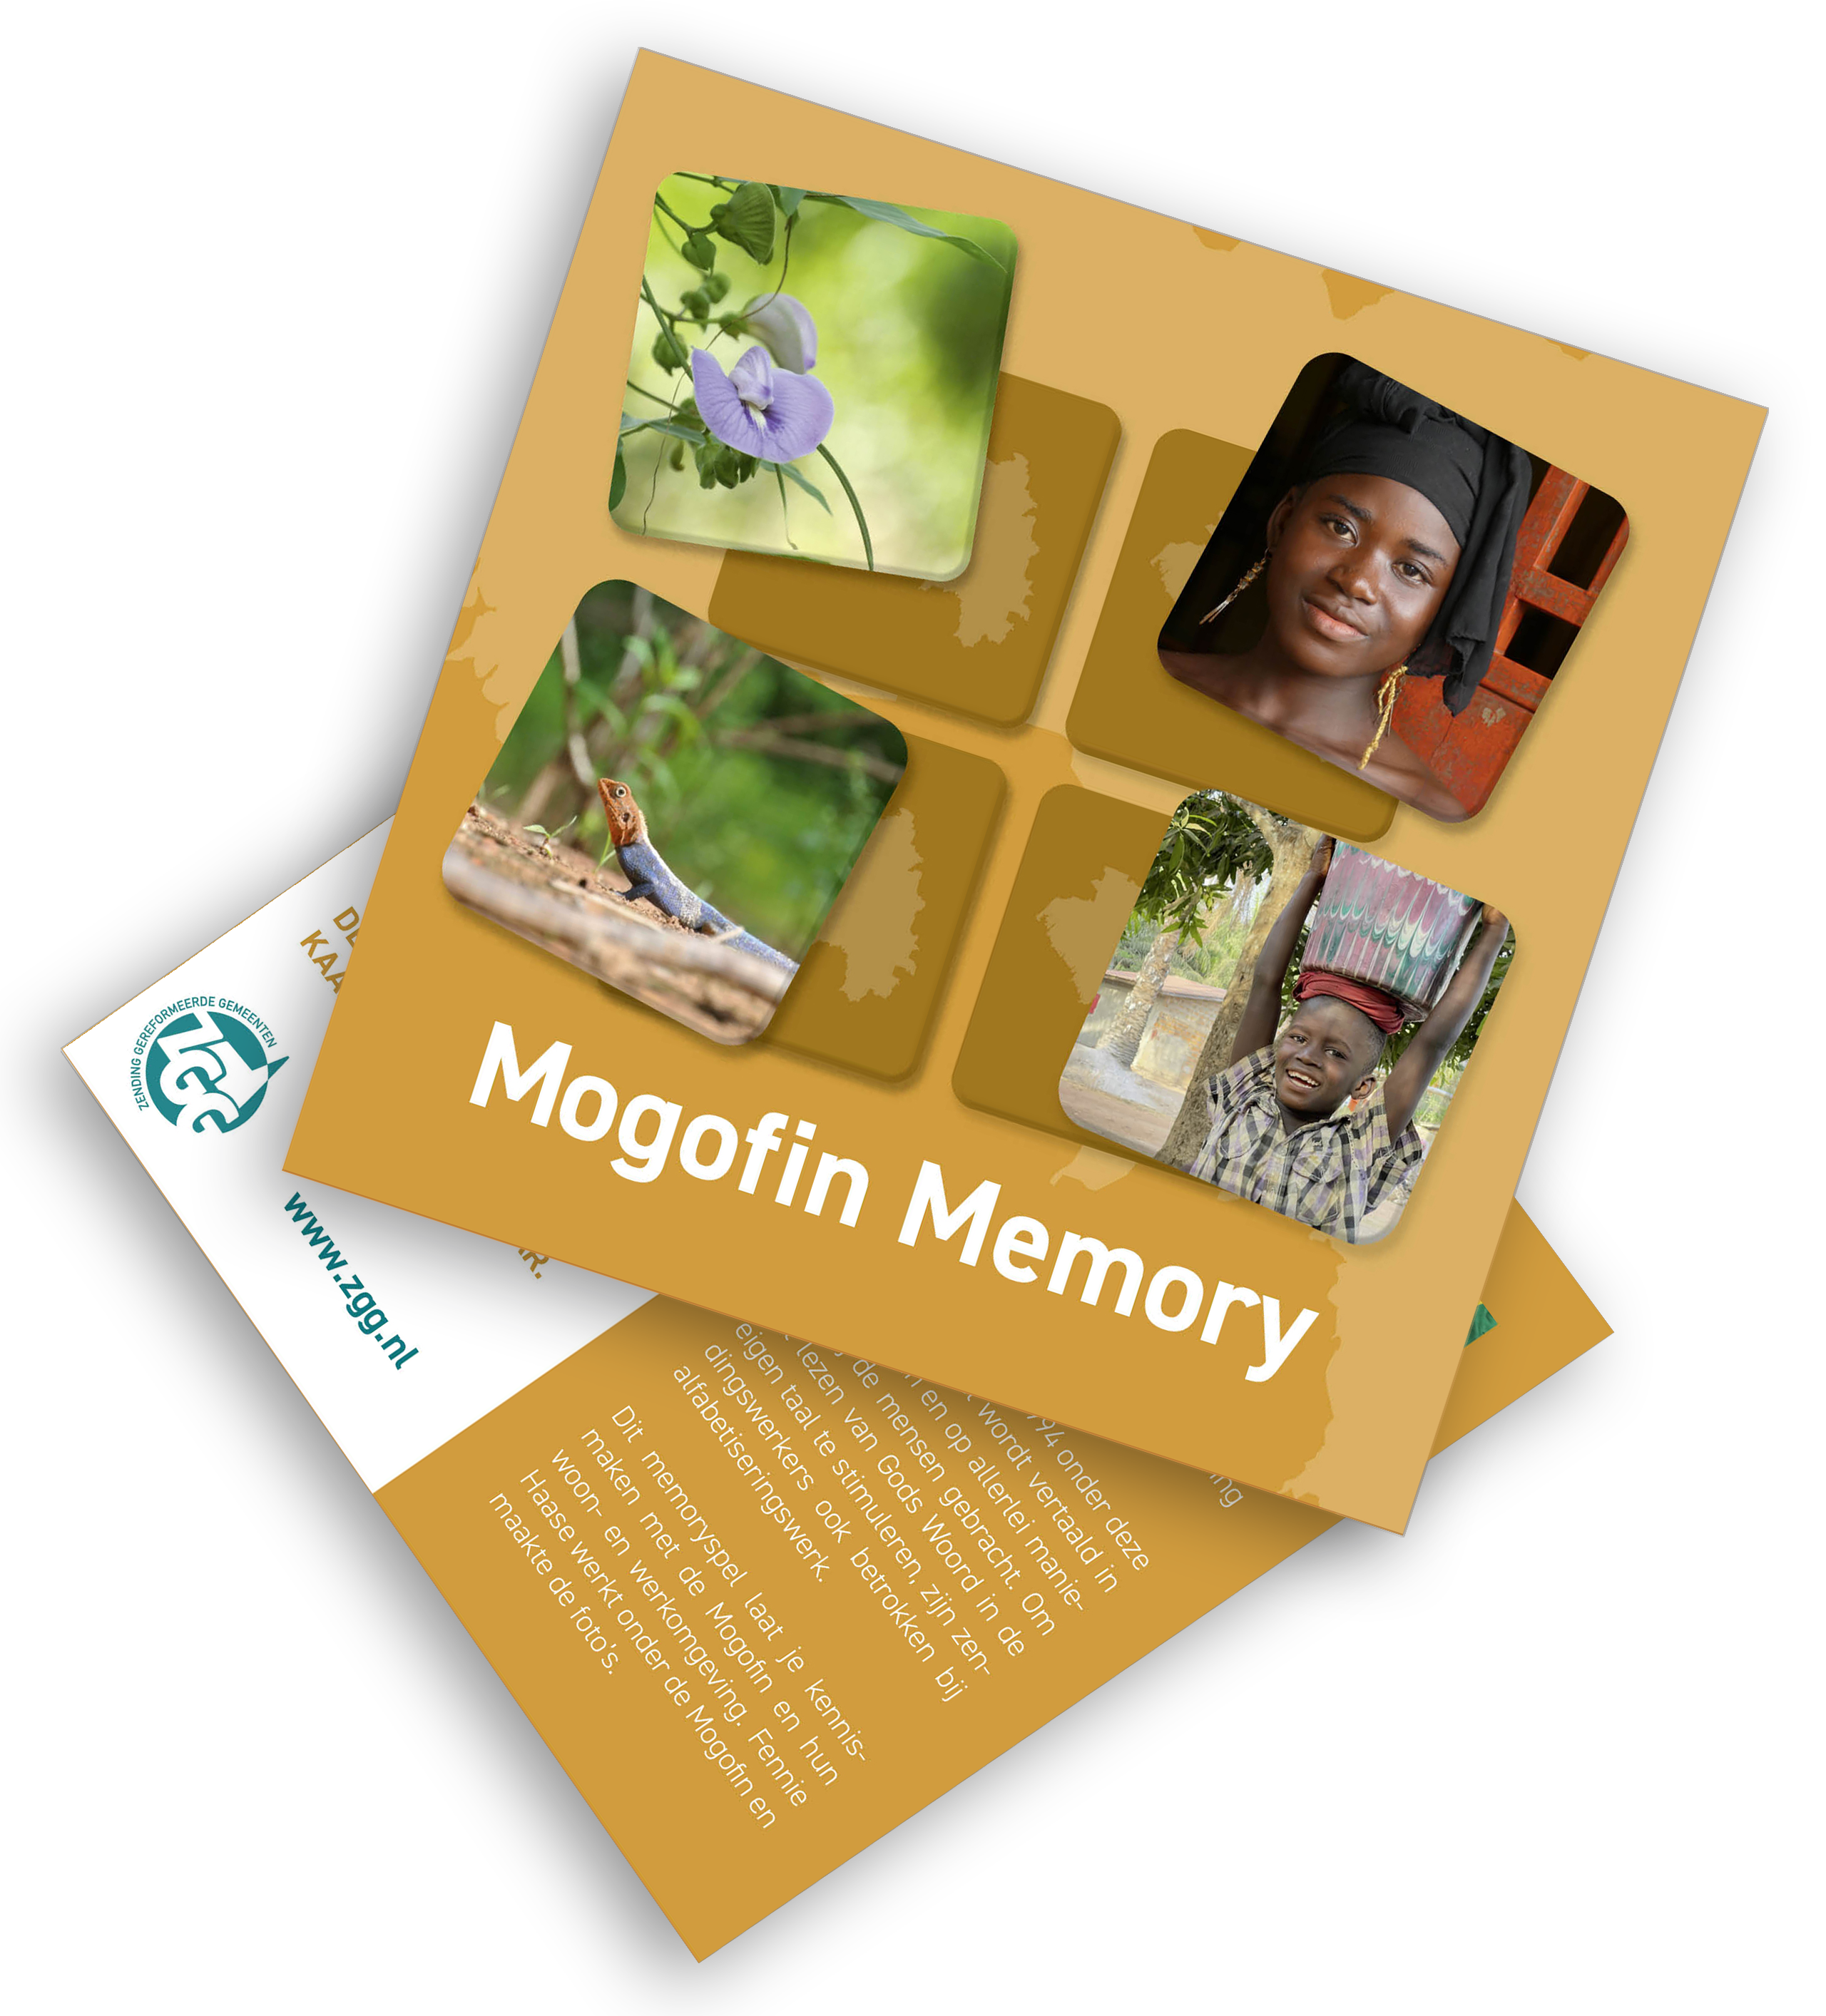 Mogofin Memory